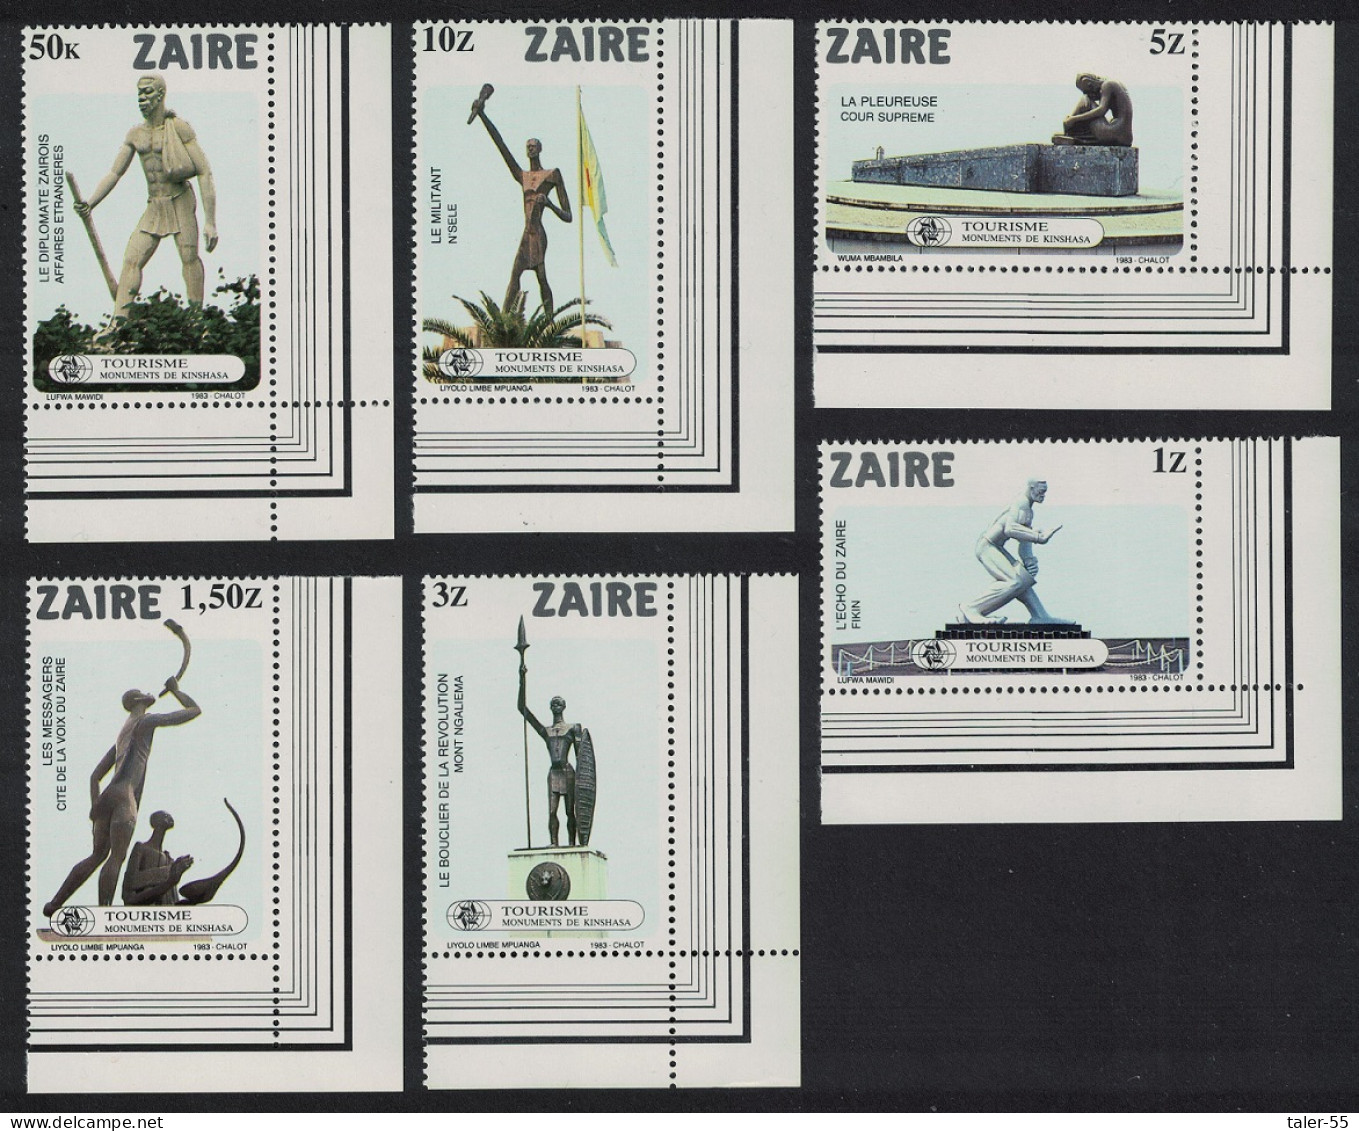 Zaire Kinshasa Monuments 6v Corners 1983 MNH SG#1157-1162 Sc#1115-1120 - Unused Stamps